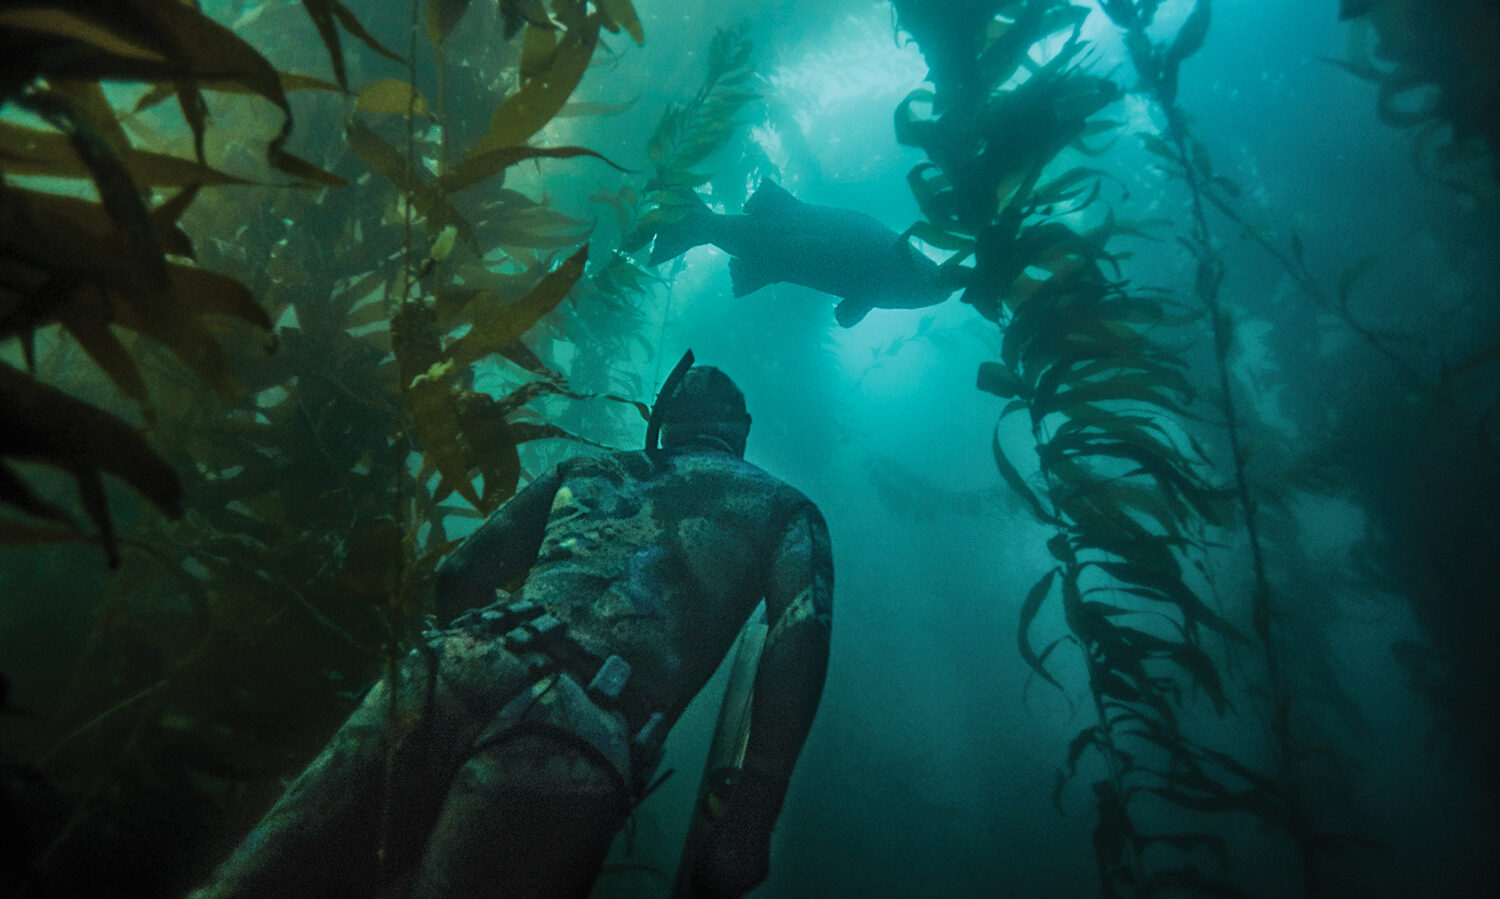 spearfisherman views bass through underwater foliage